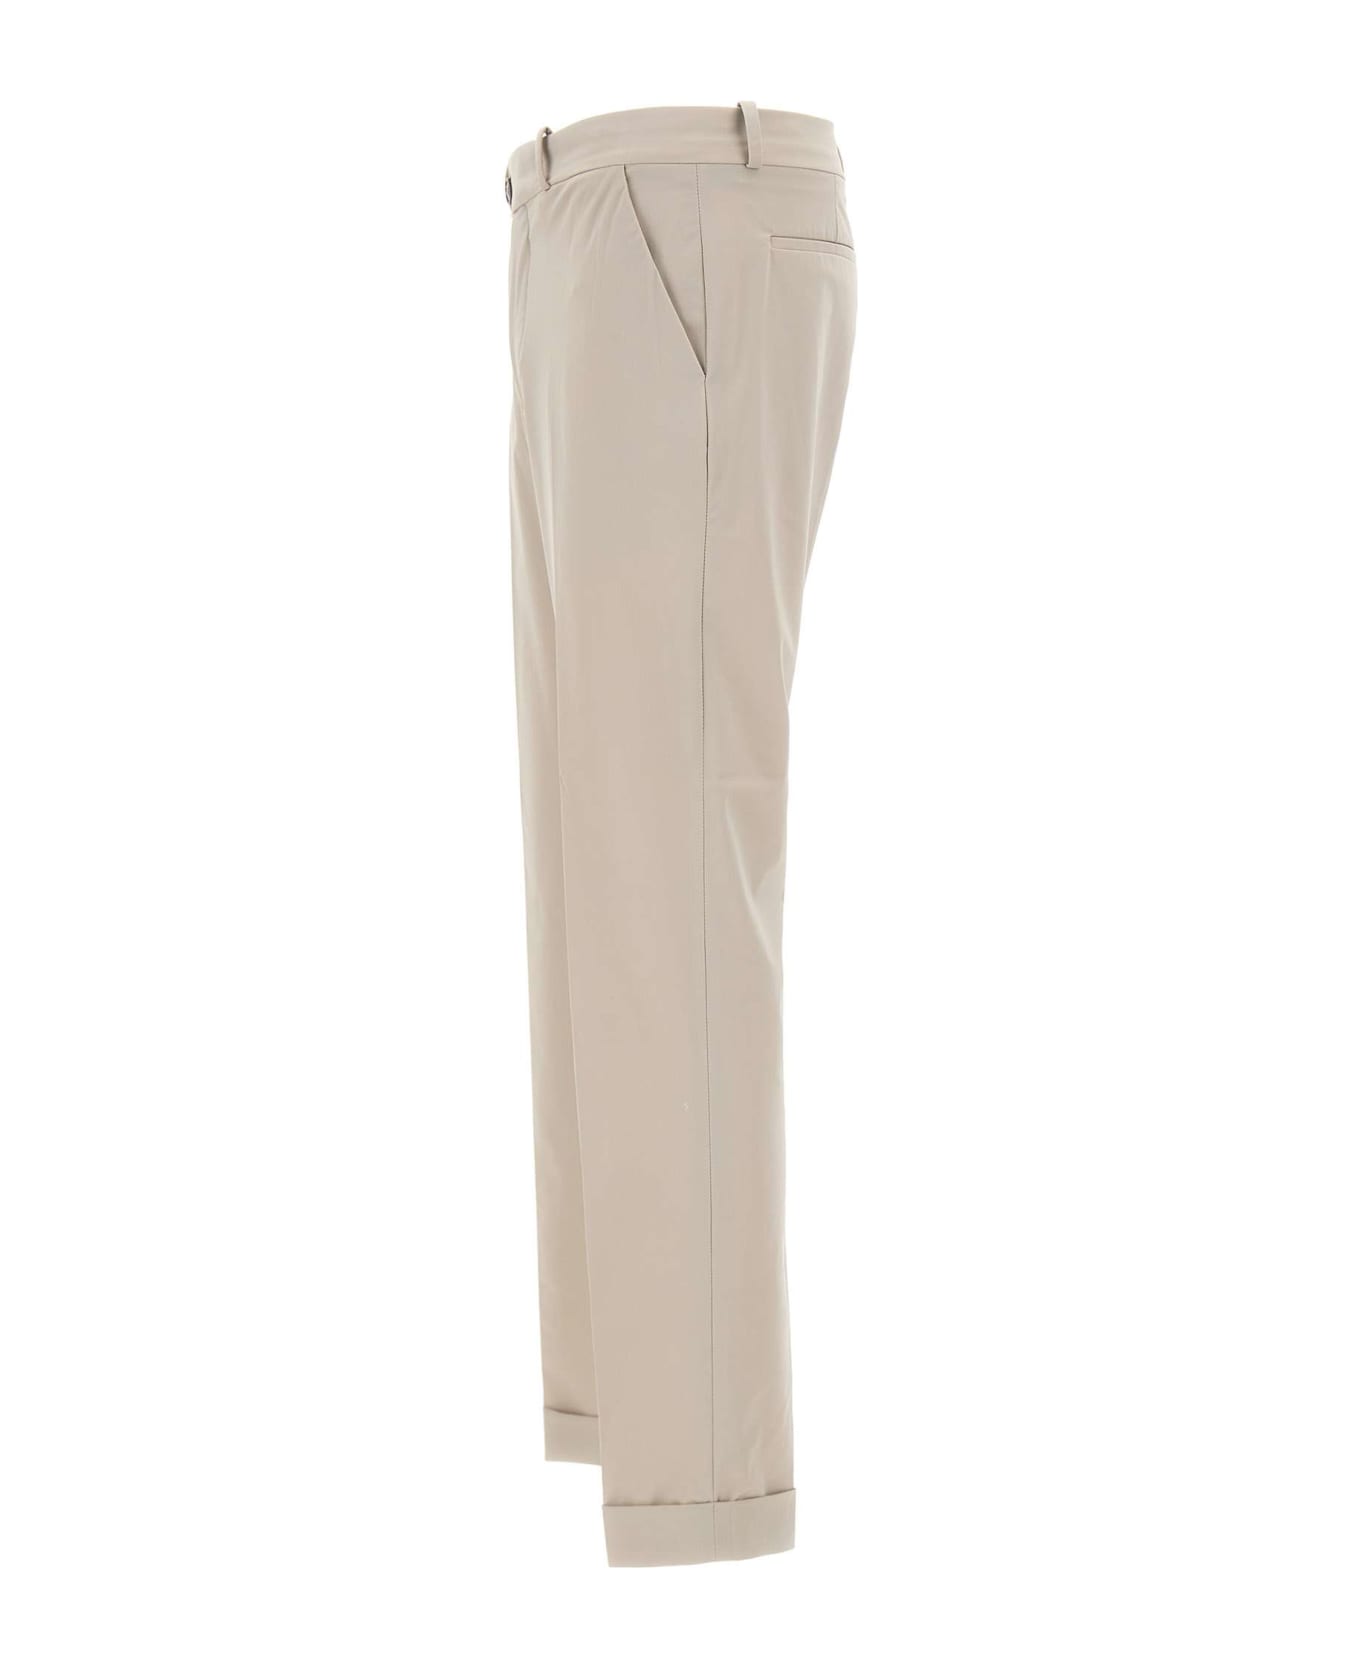 RRD - Roberto Ricci Design Men's Trousers 'revo Chino' - White sand